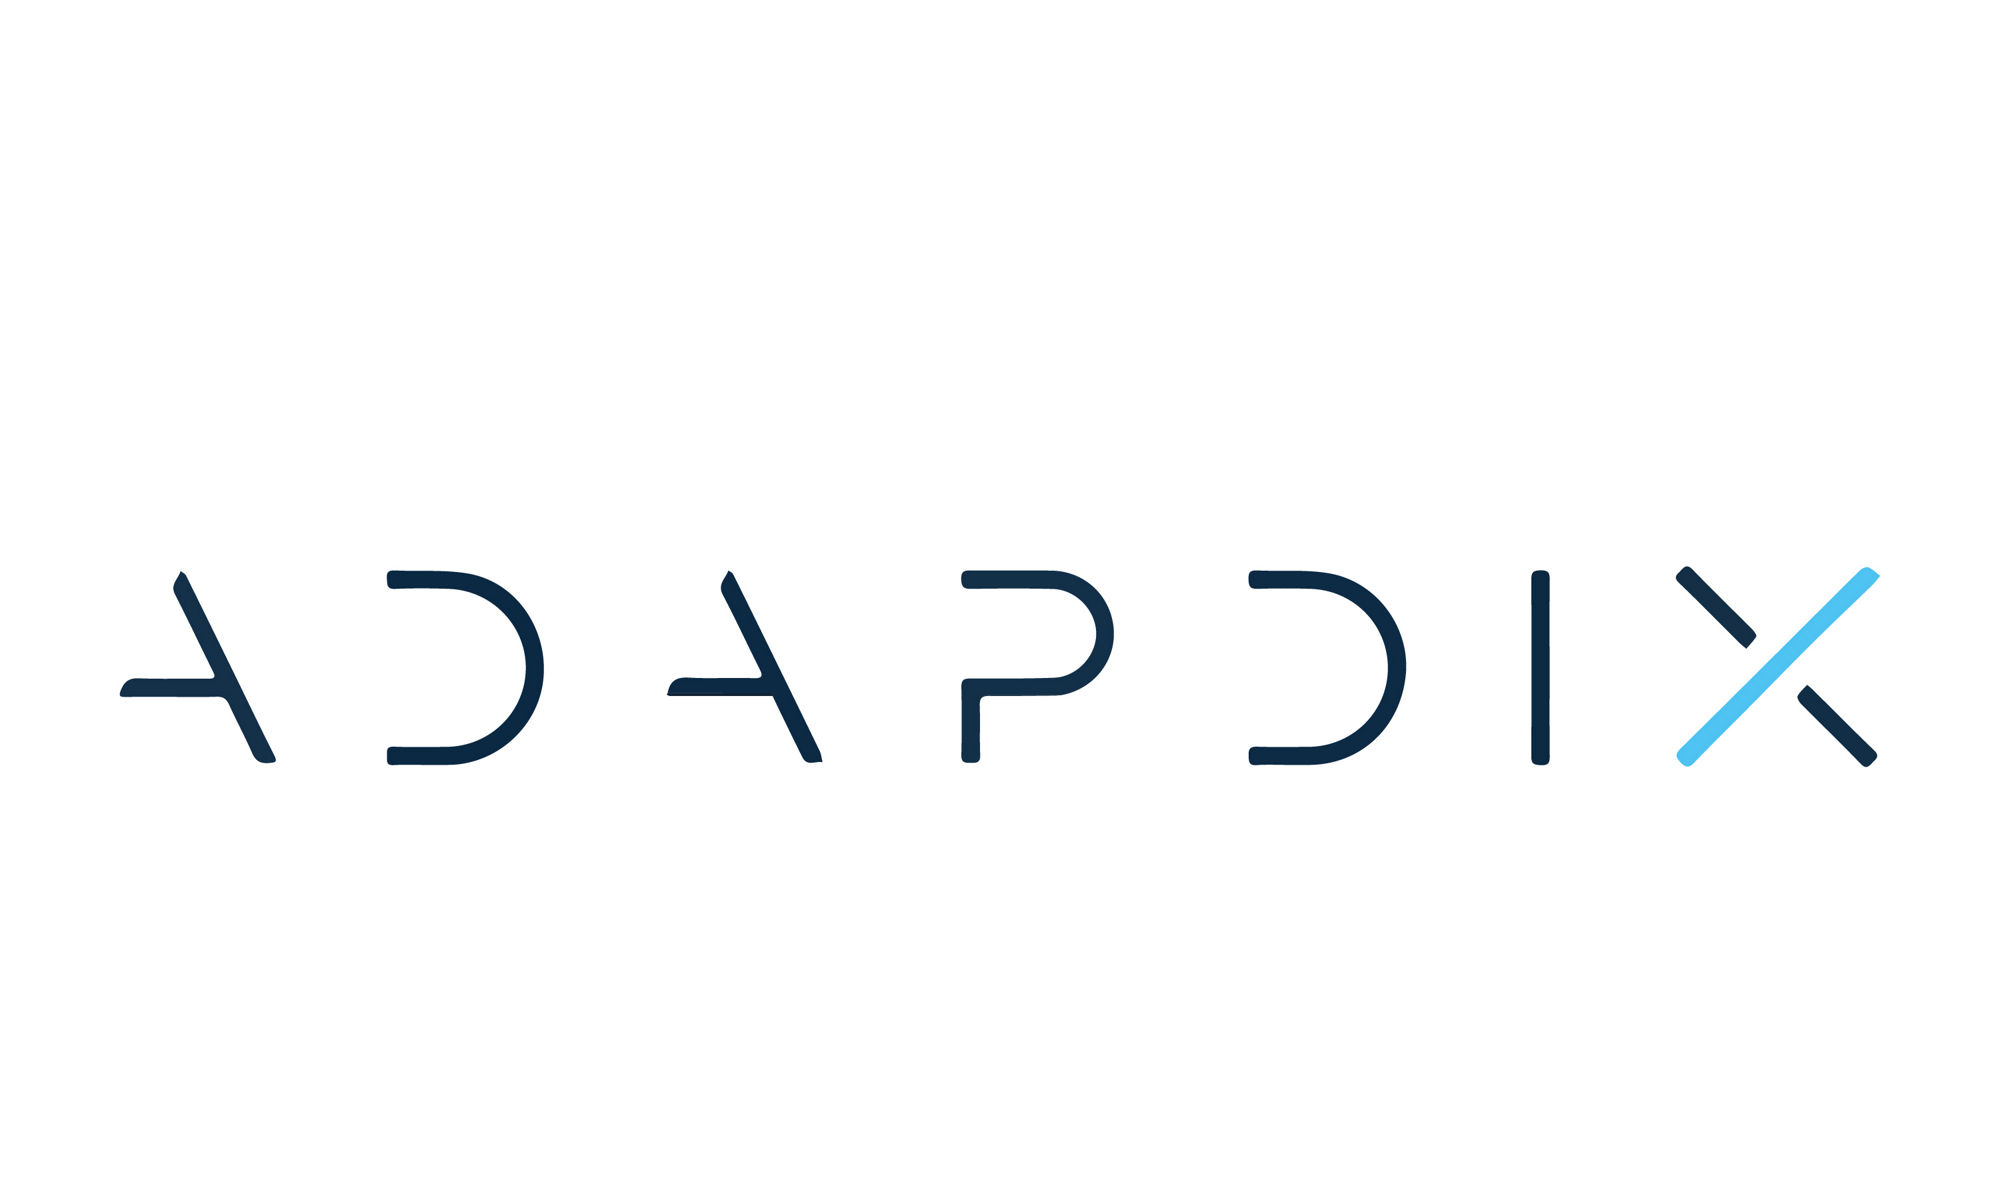 Adapdix company logo